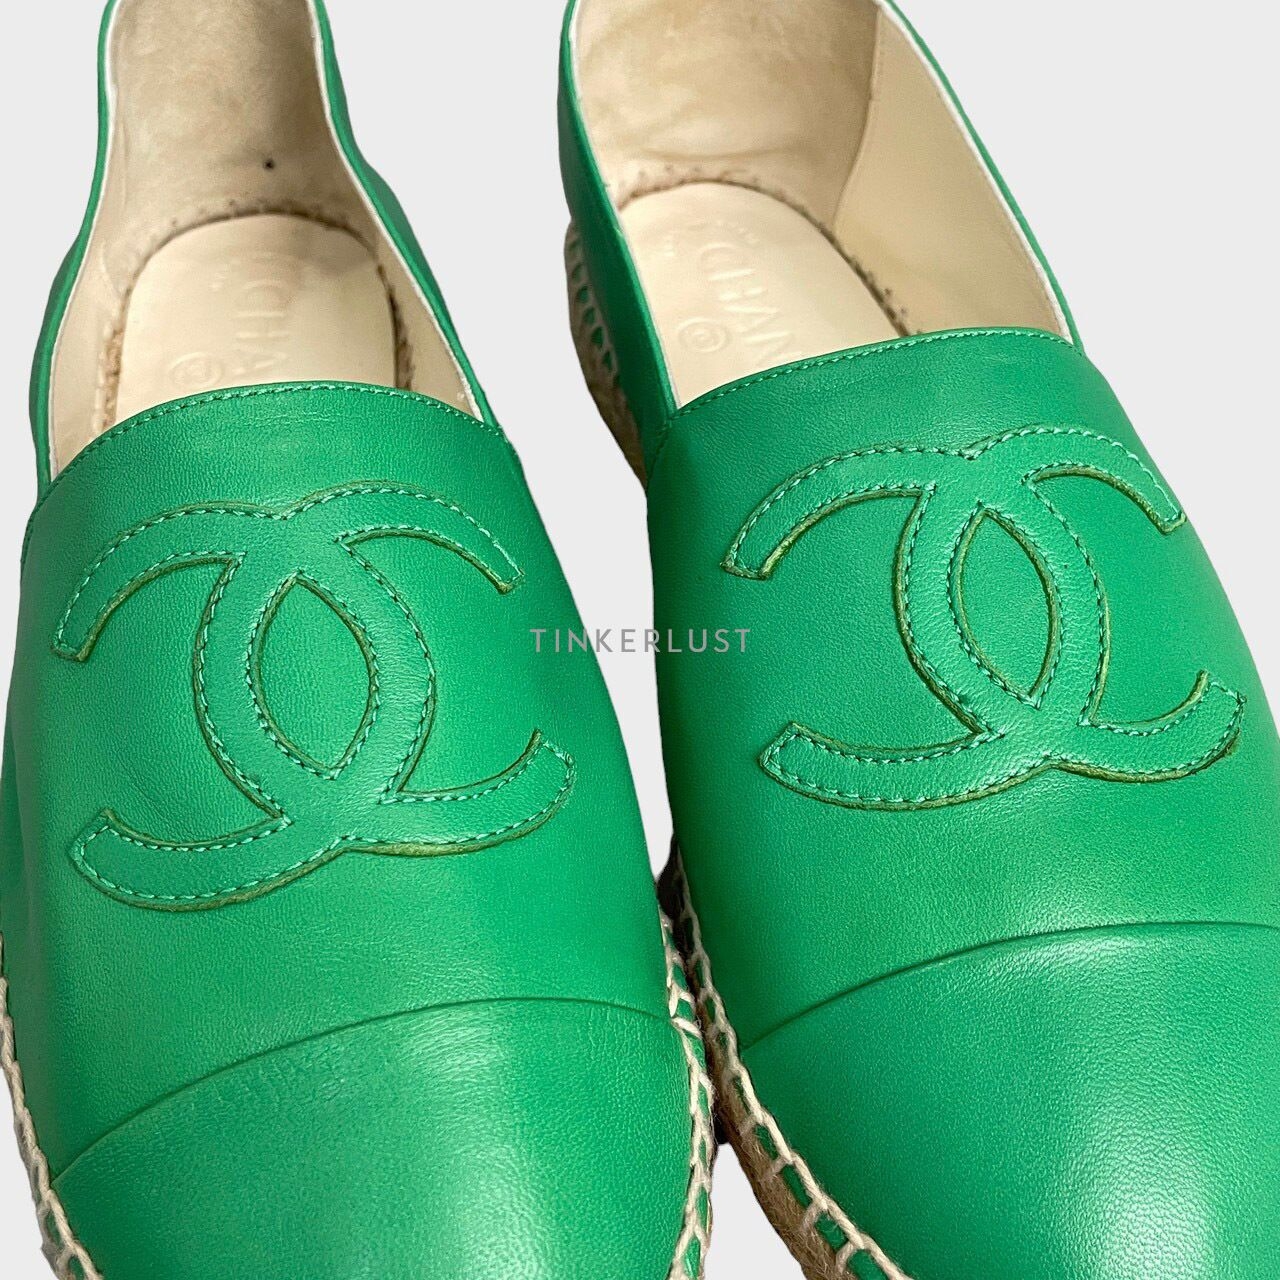 Chanel Green CC Leather Espadrilles Flats 